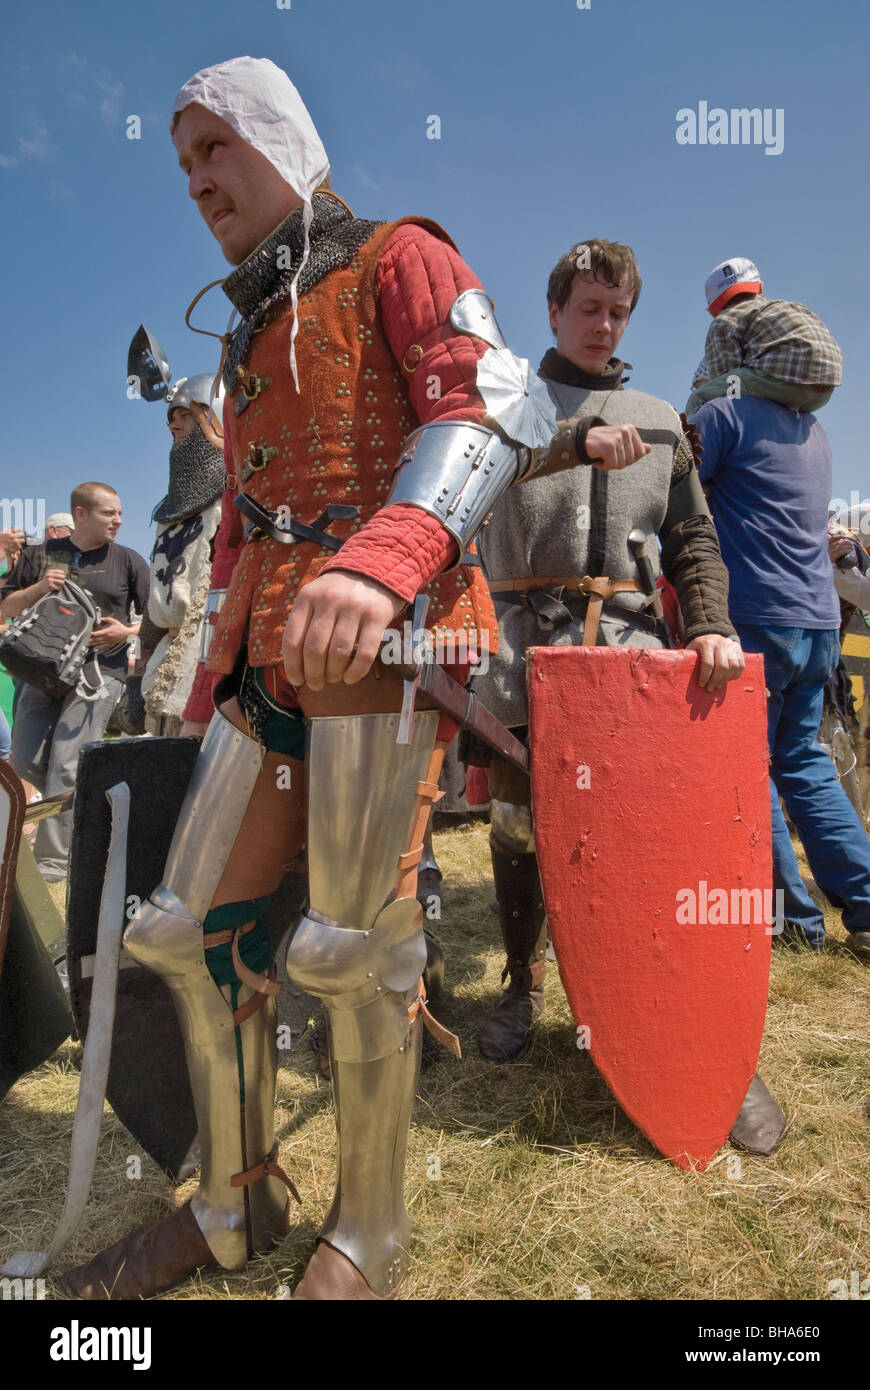 Reenactors preparing to recreate Battle of Grunwald of 1410 in Warminsko-Mazurskie province, Poland Stock Photo